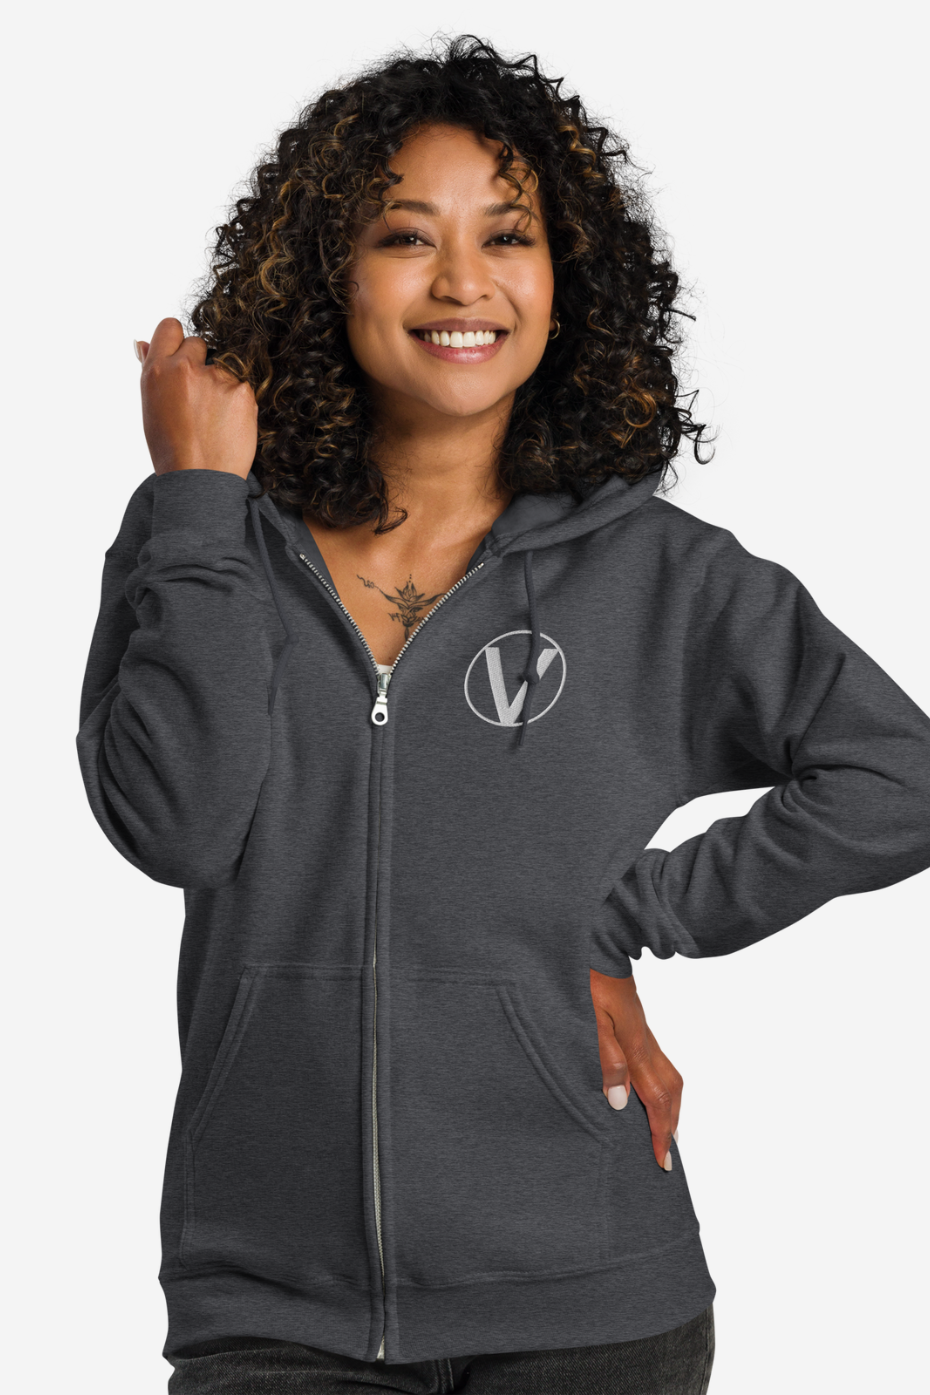 V Symbol Unisex zip hoodie - Embroidery